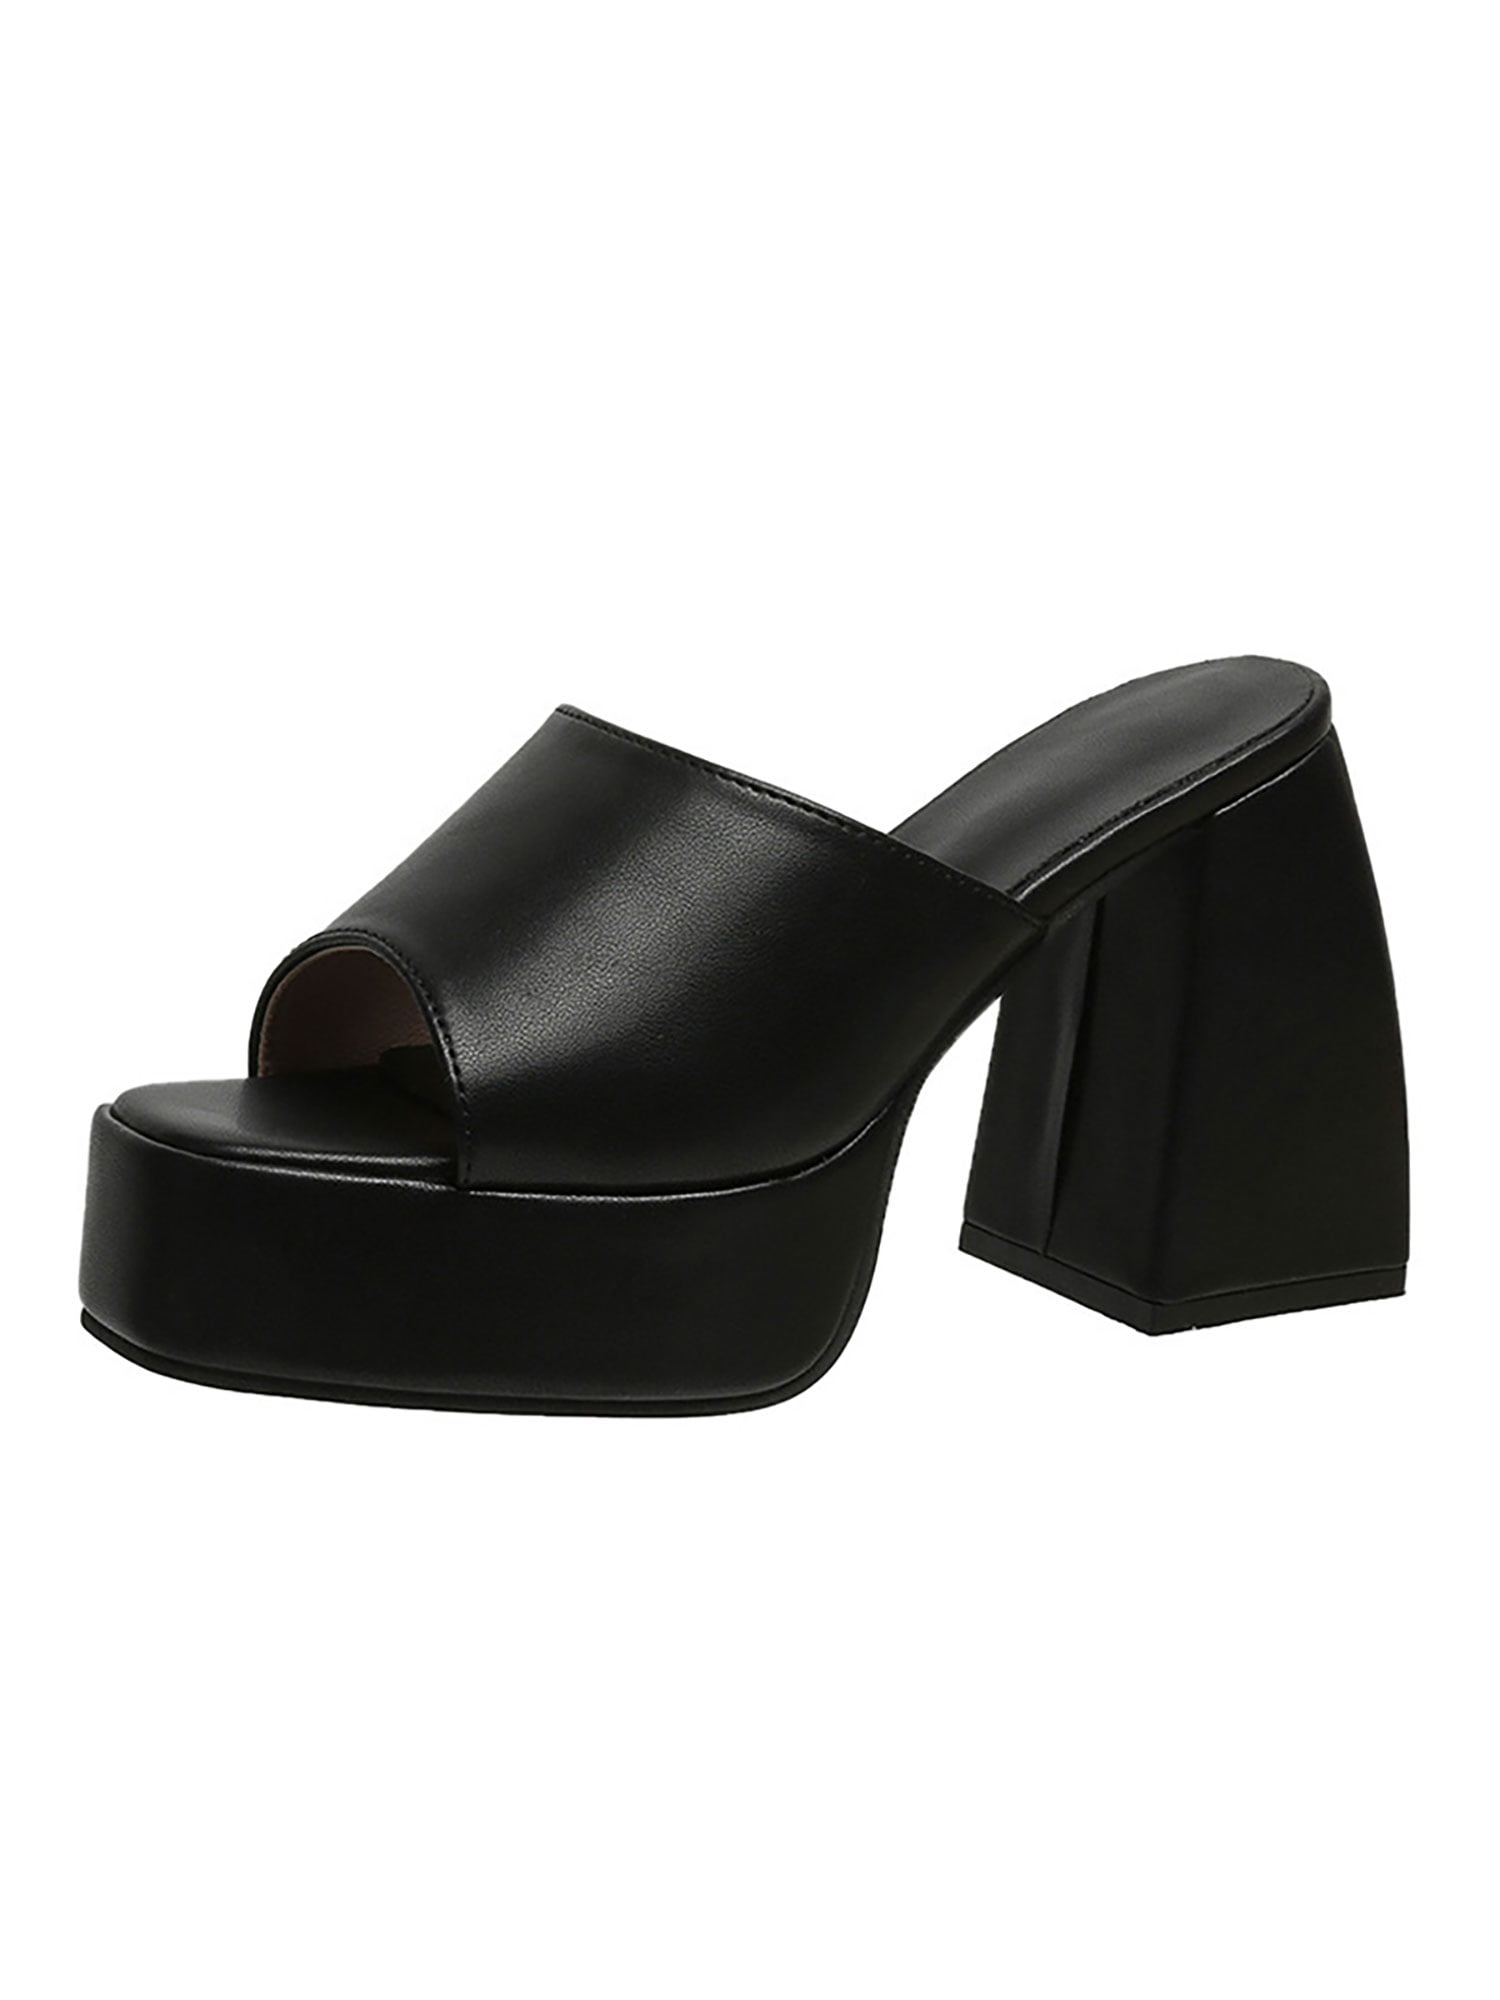 Reiss Kate Leather Strappy High Heel Sandals | REISS Australia